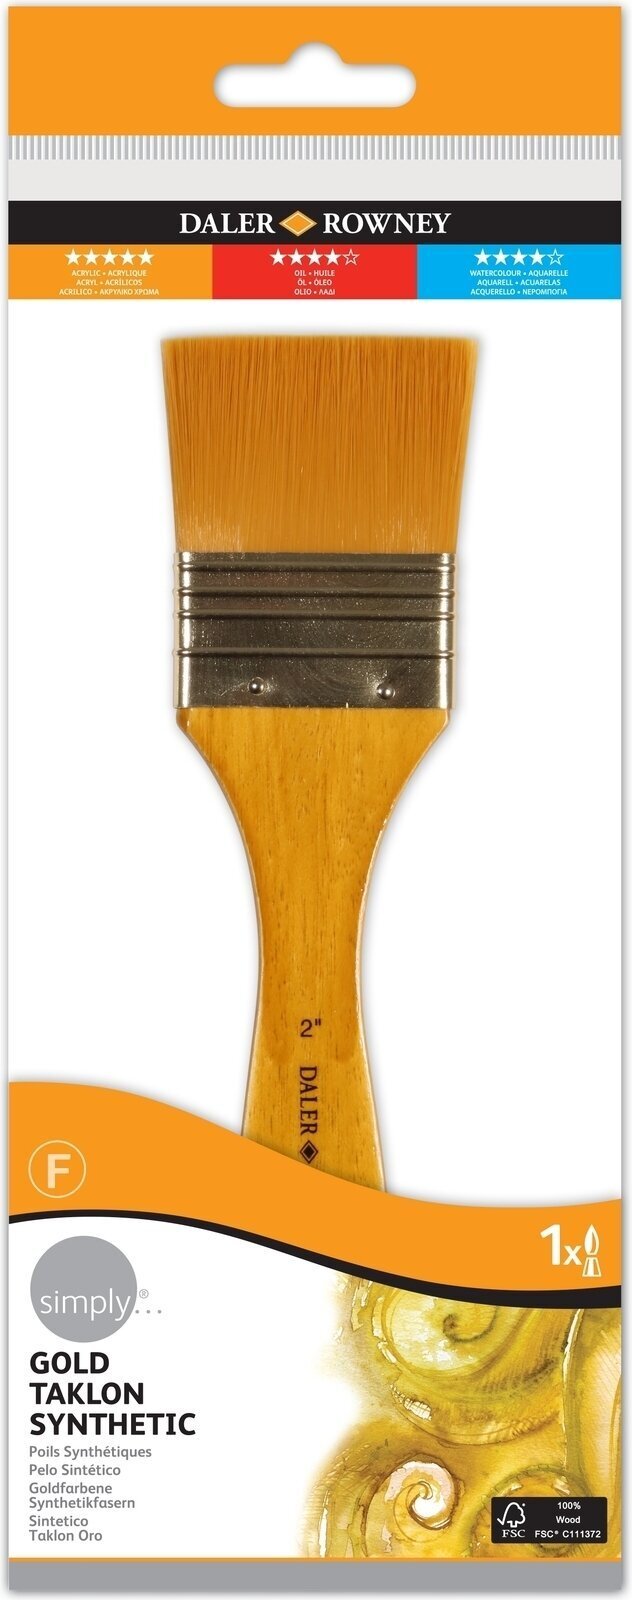 Verfkwast Daler Rowney Simply Acrylic Brush Gold Taklon Synthetic Platte kwast 2 1 stuk